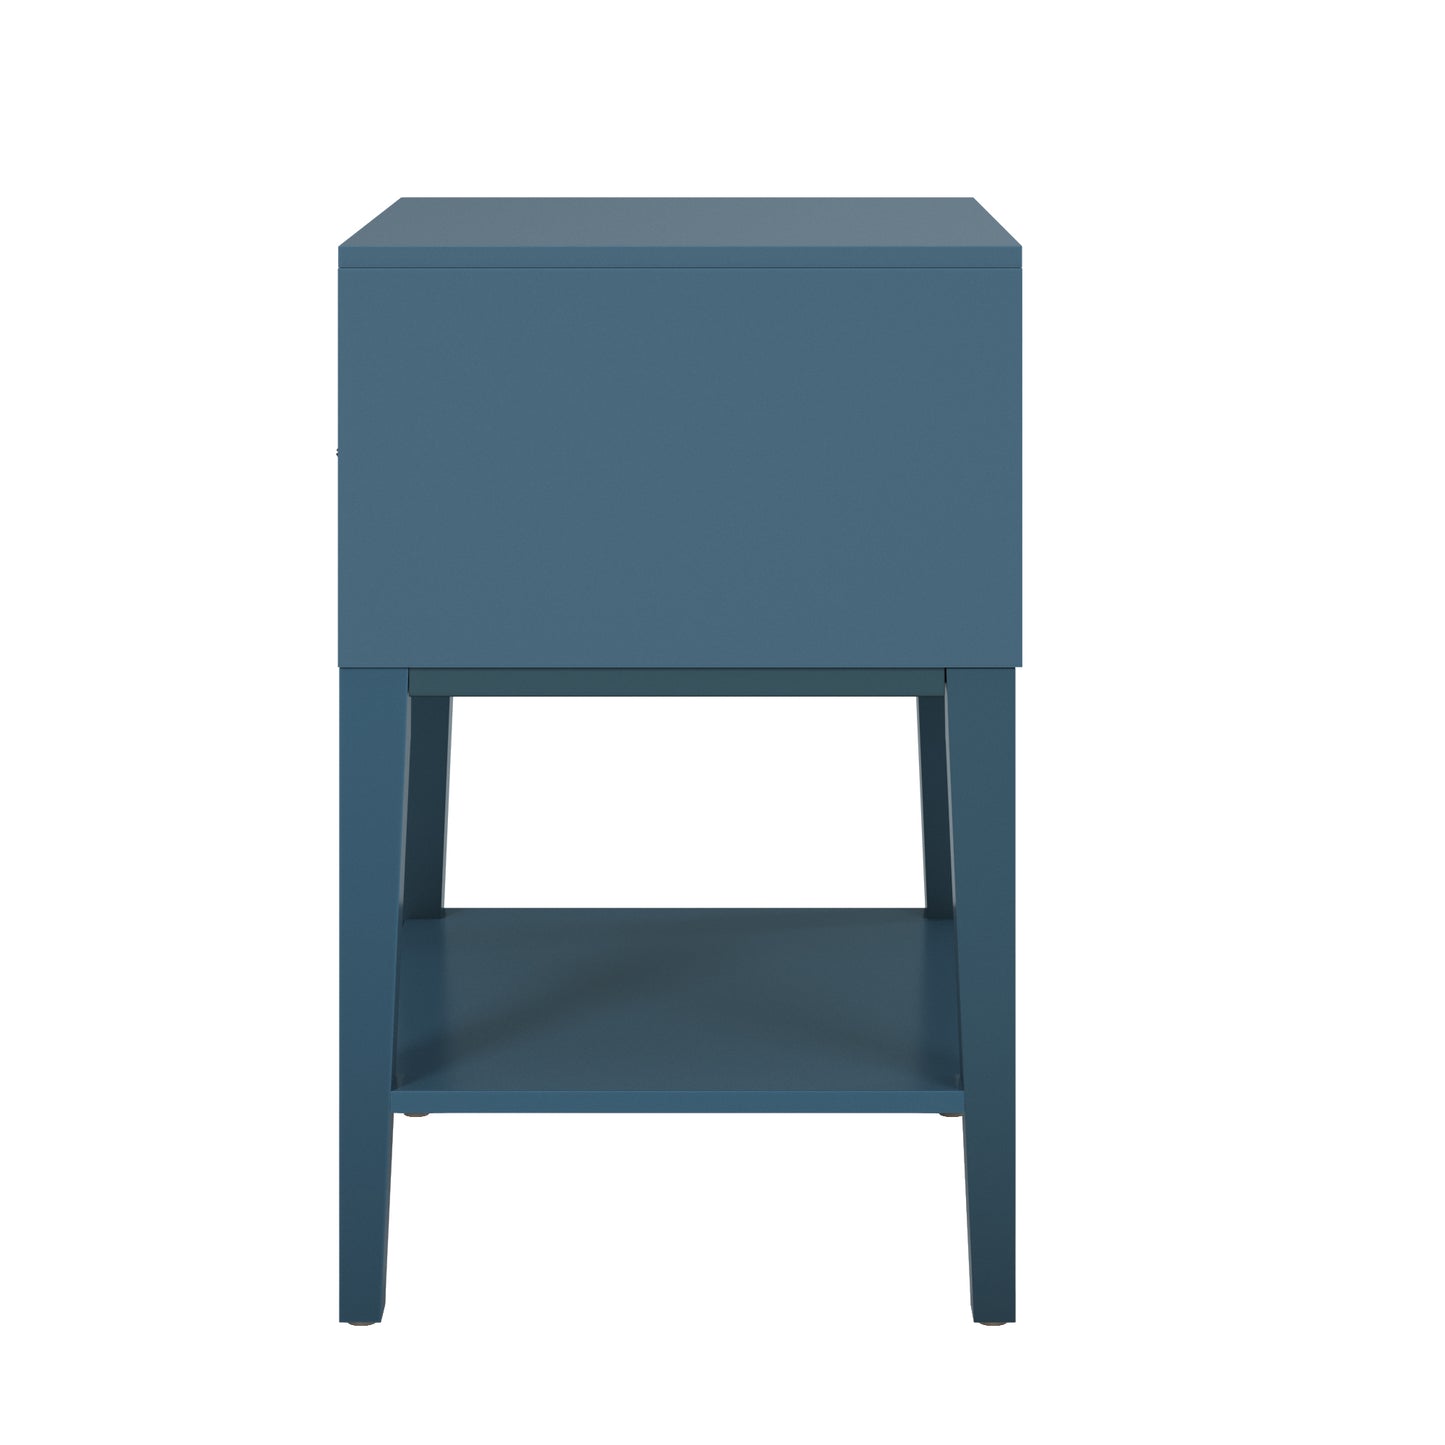 1-Drawer Side Table - Blue Steel